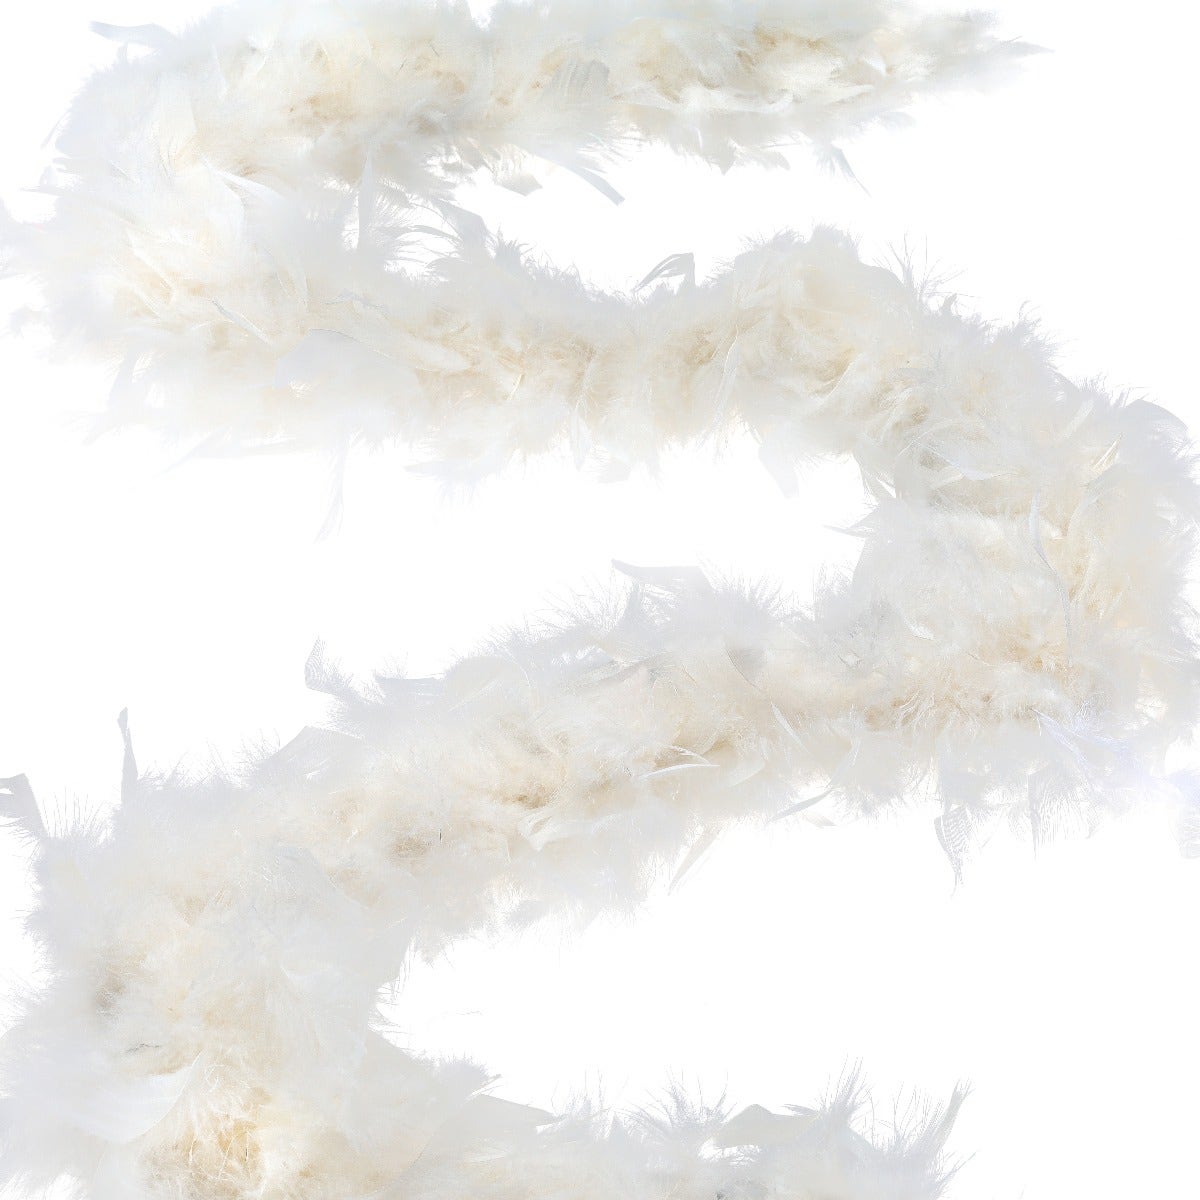 Chandelle Feather Boa - Medium Weight - Ivory